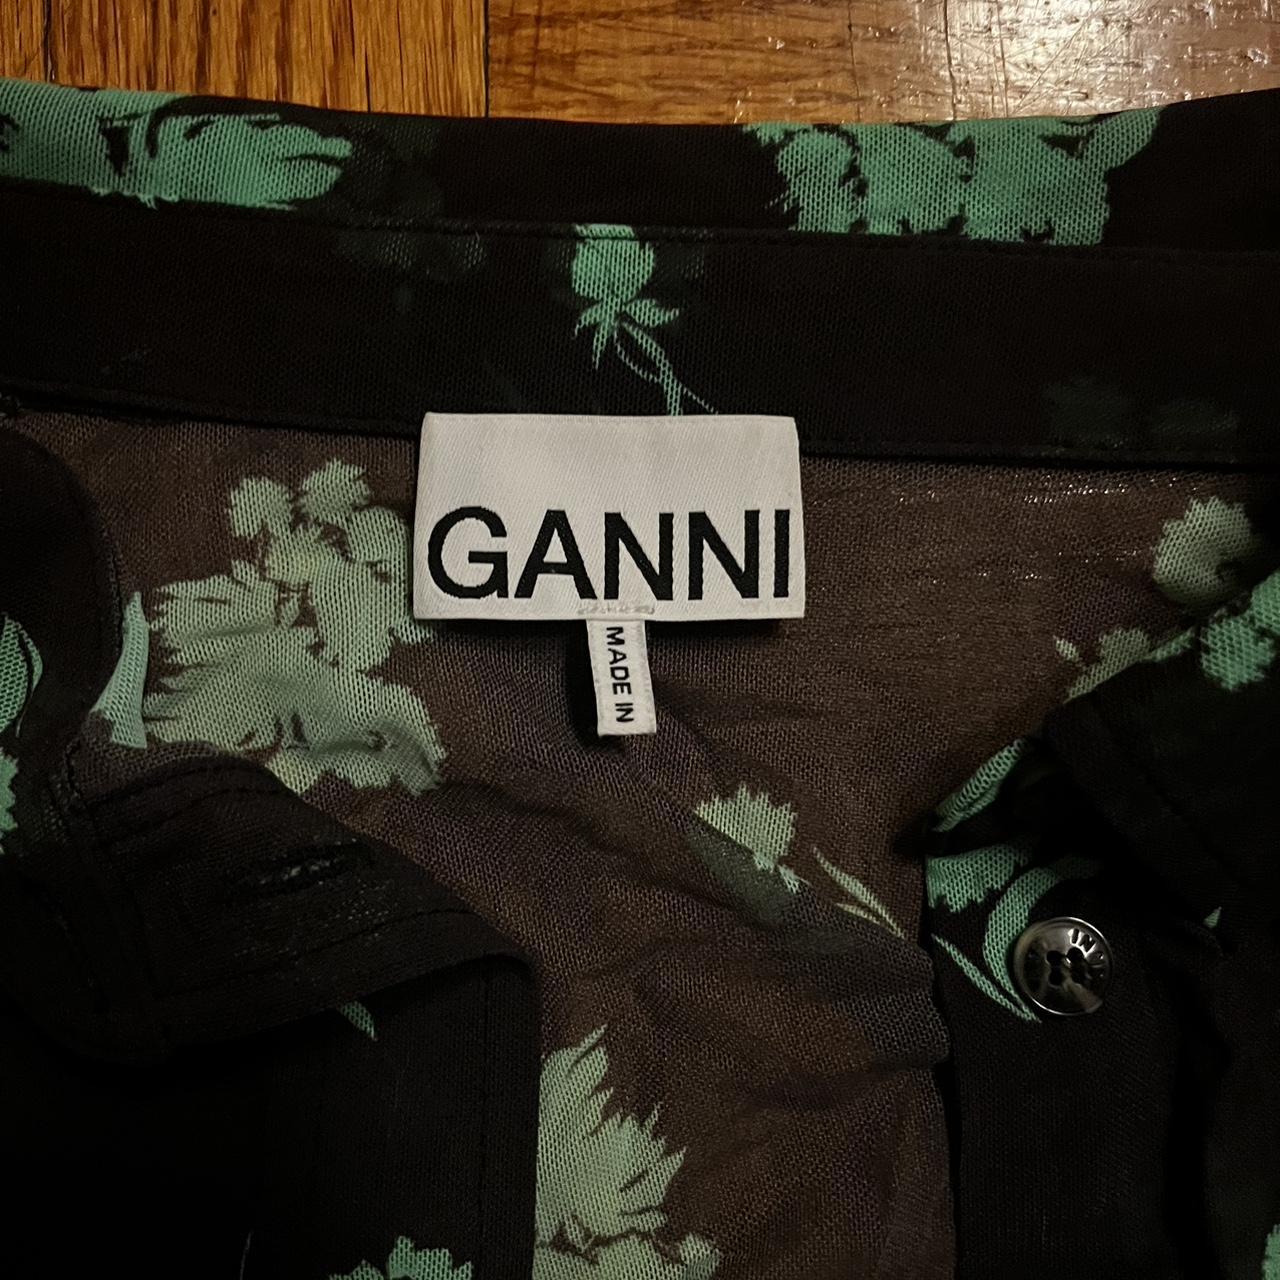 Ganni Women's Black and Green Shirt (2)